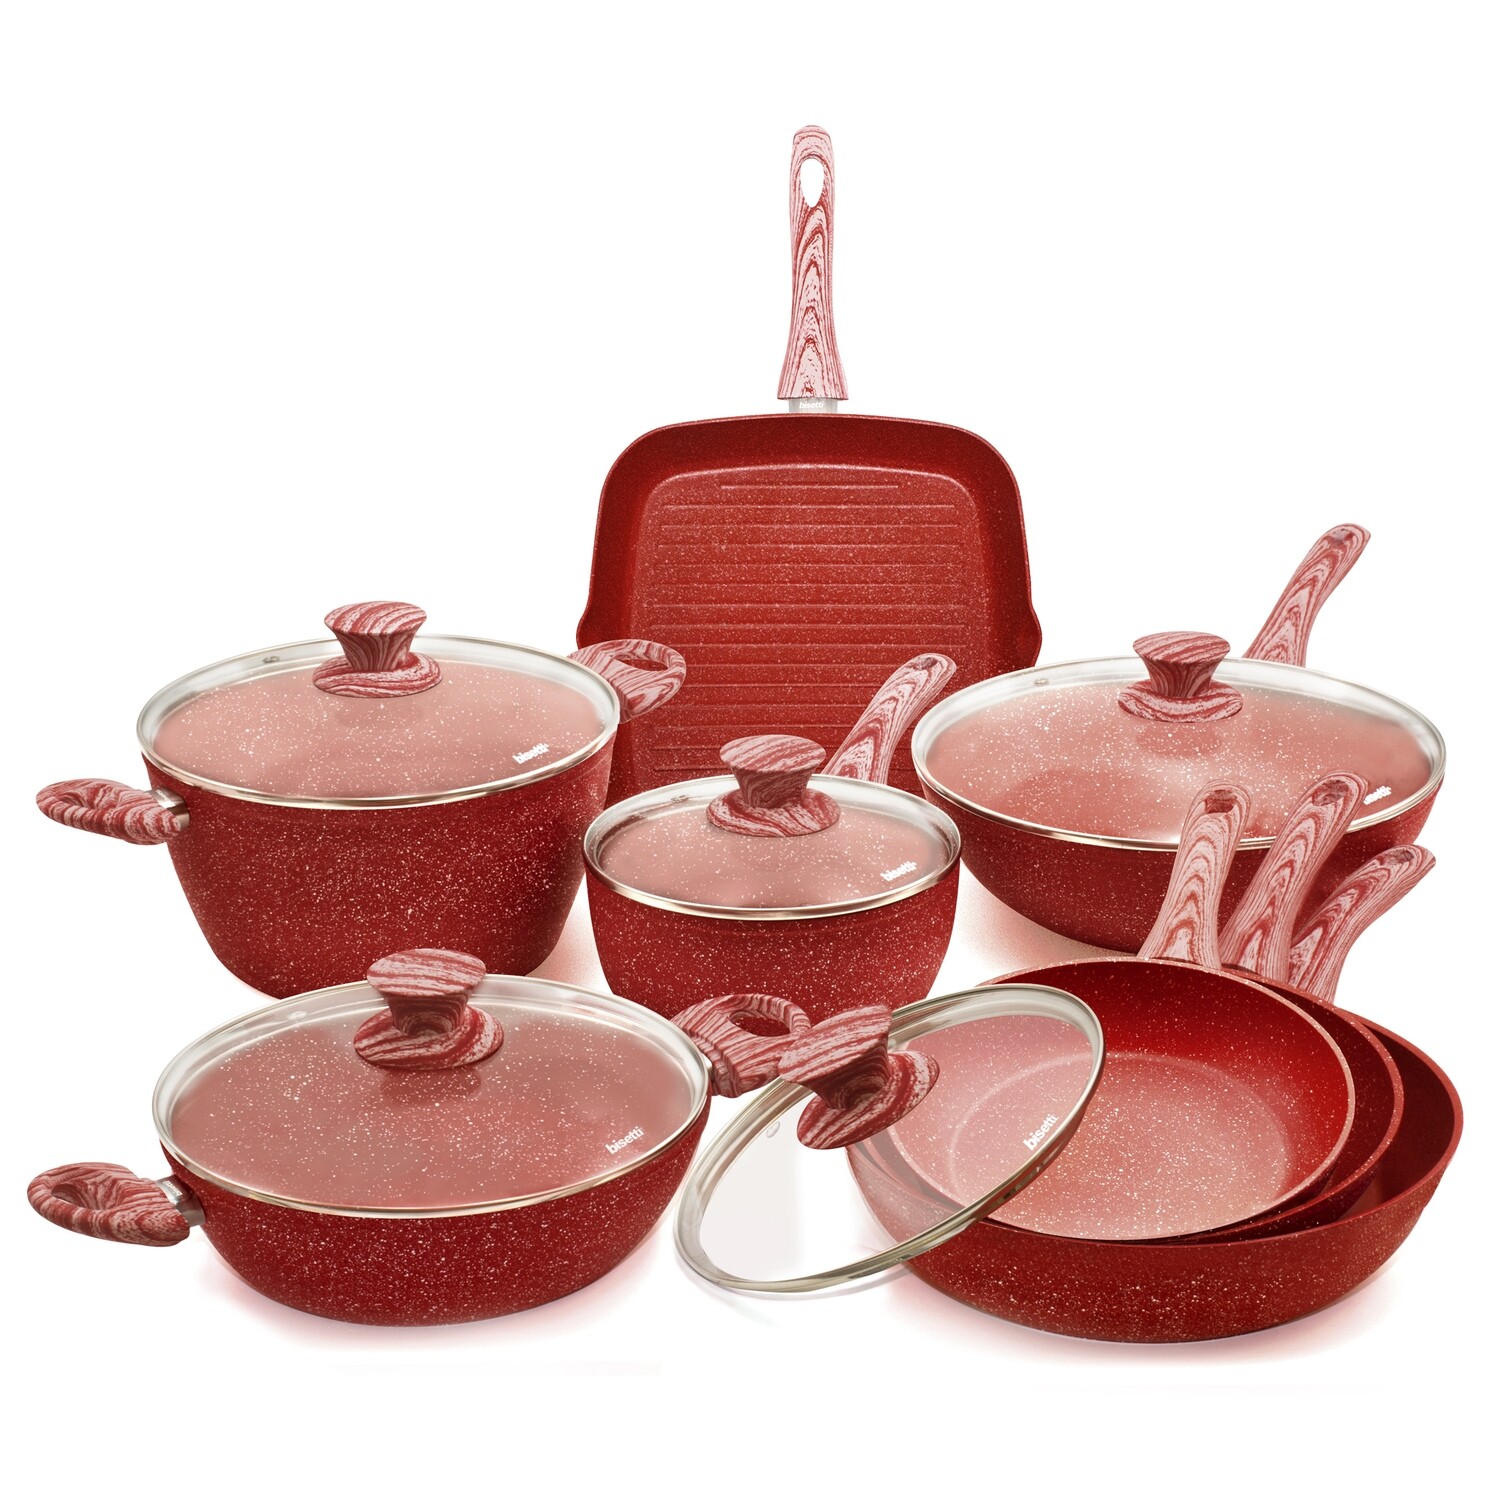 13 pieces cookware set 'Red Passion' wood colour handles